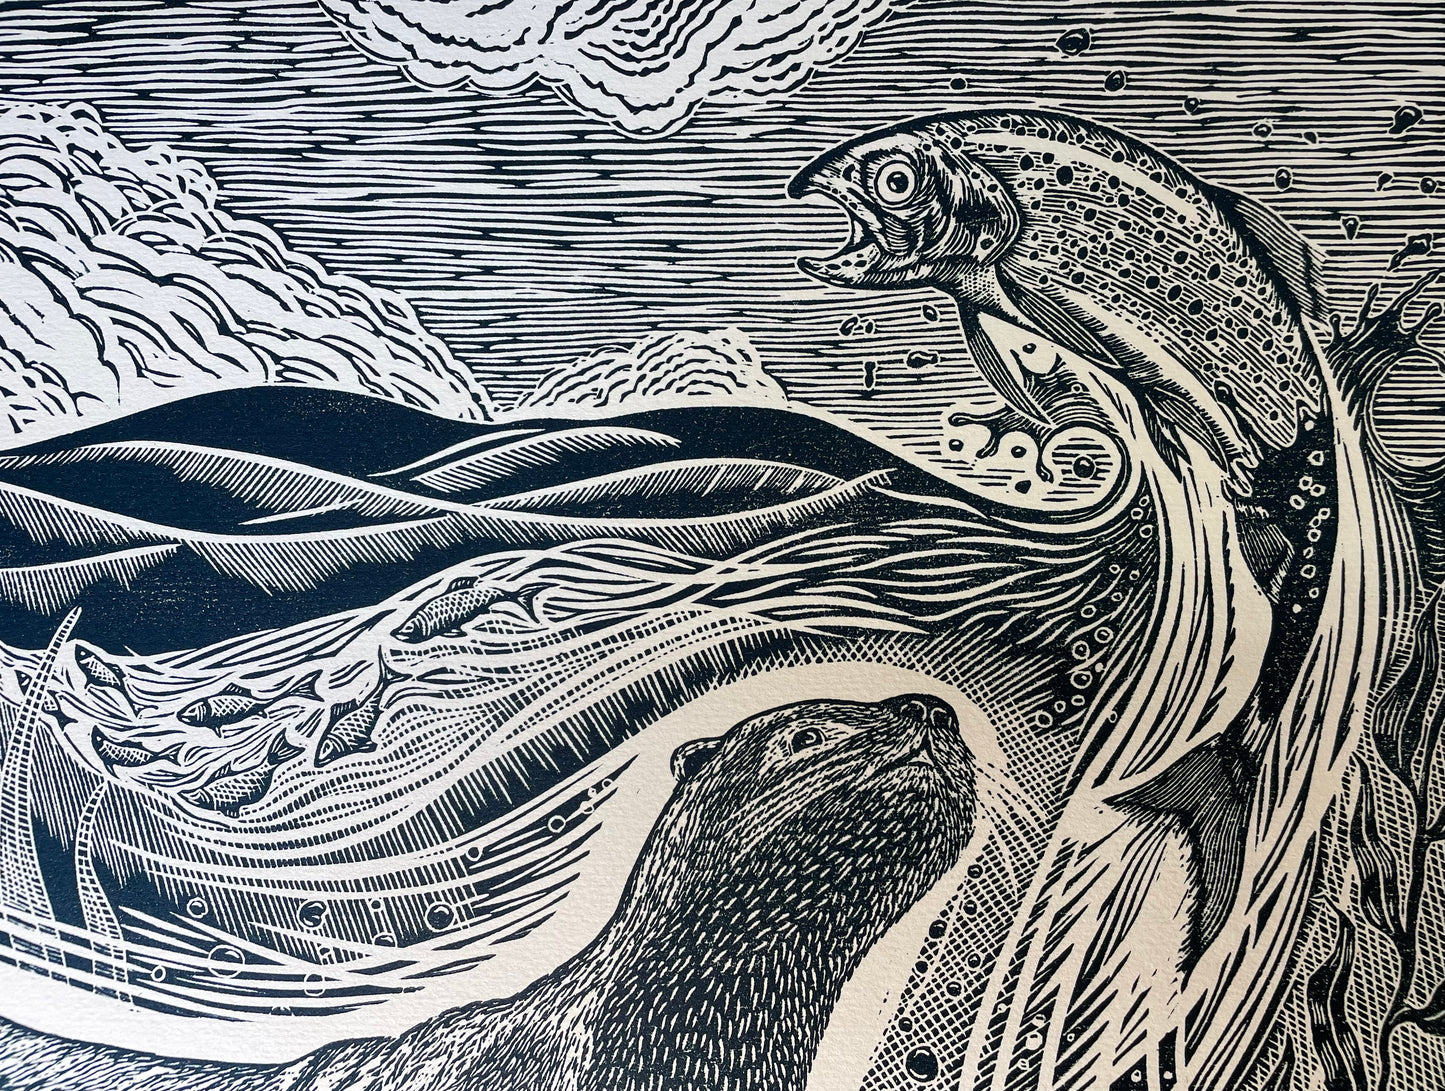 The Otter Linocut Print